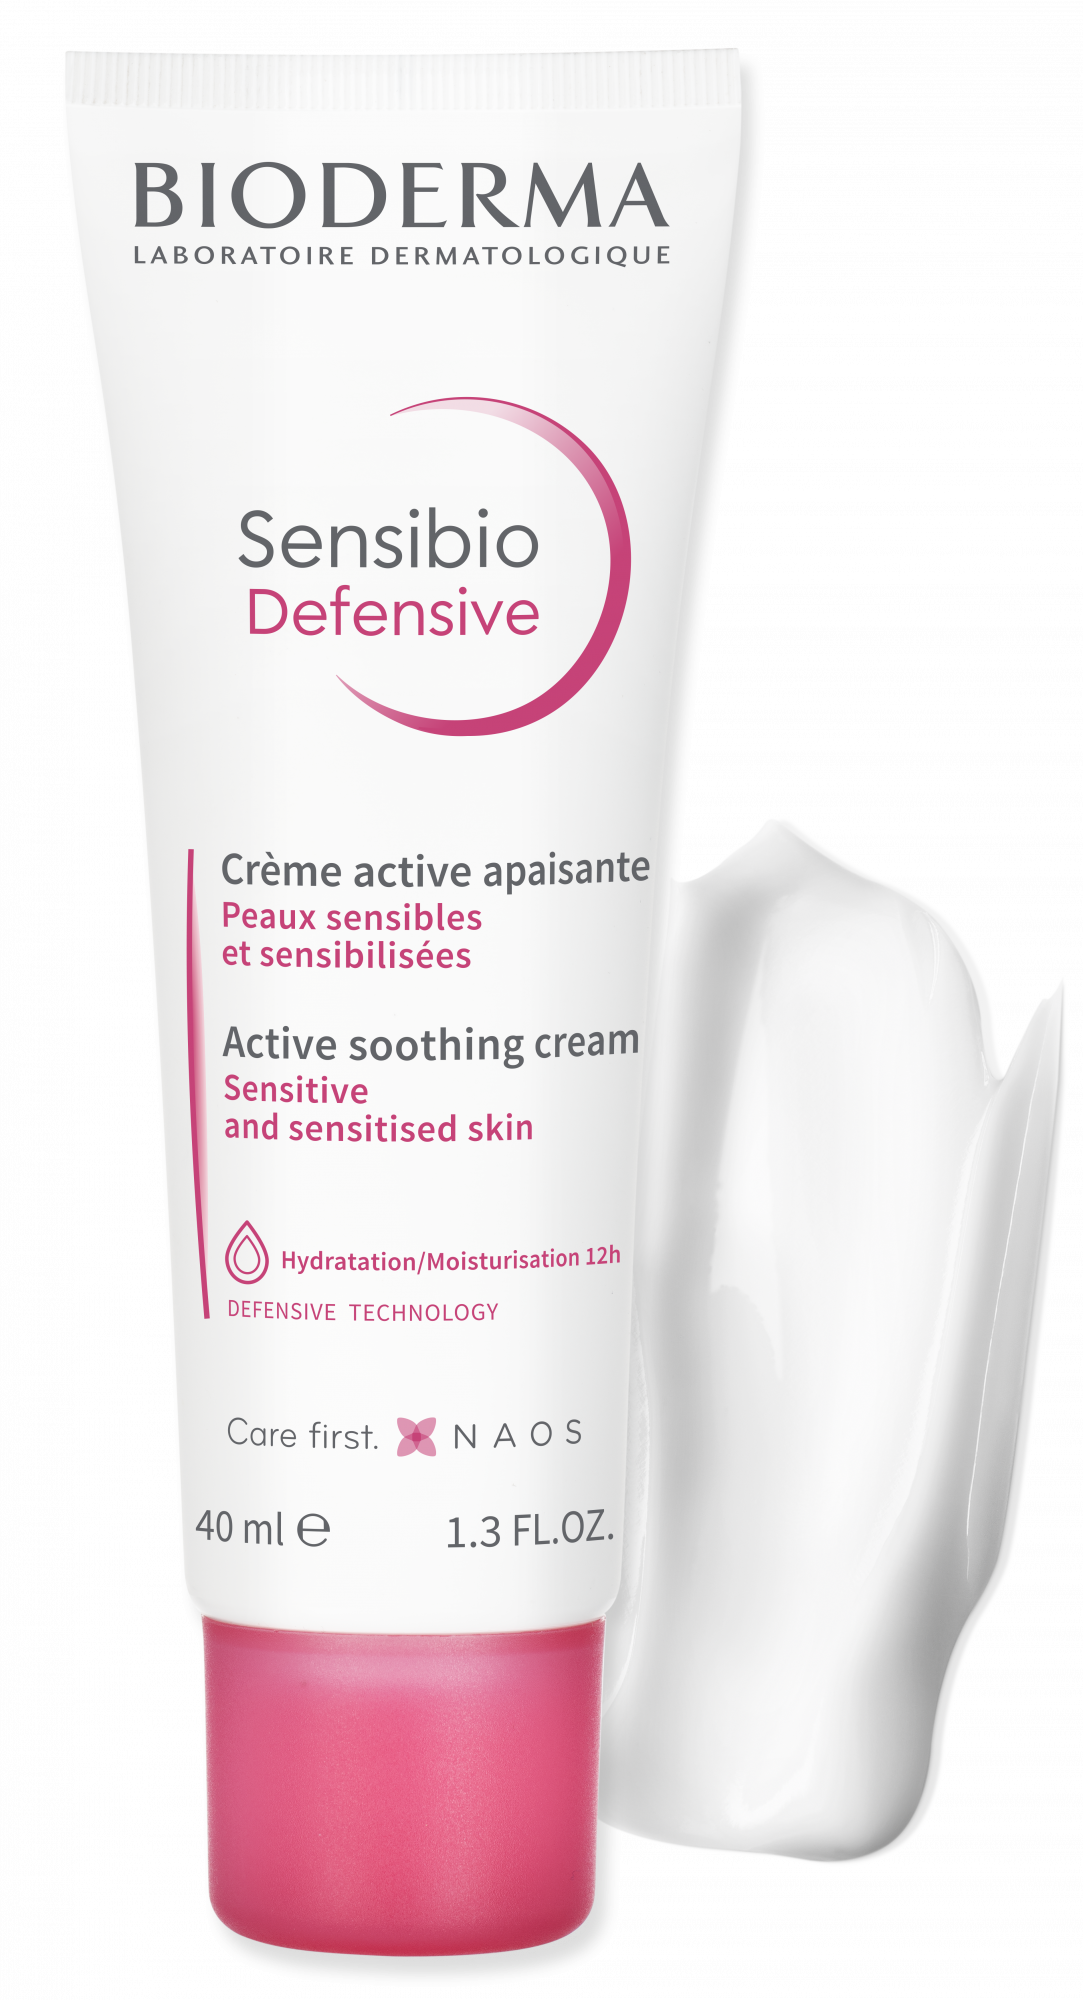 Bioderma Sensibio Rich Cream for Sensitive Intolerant Skin 40ml